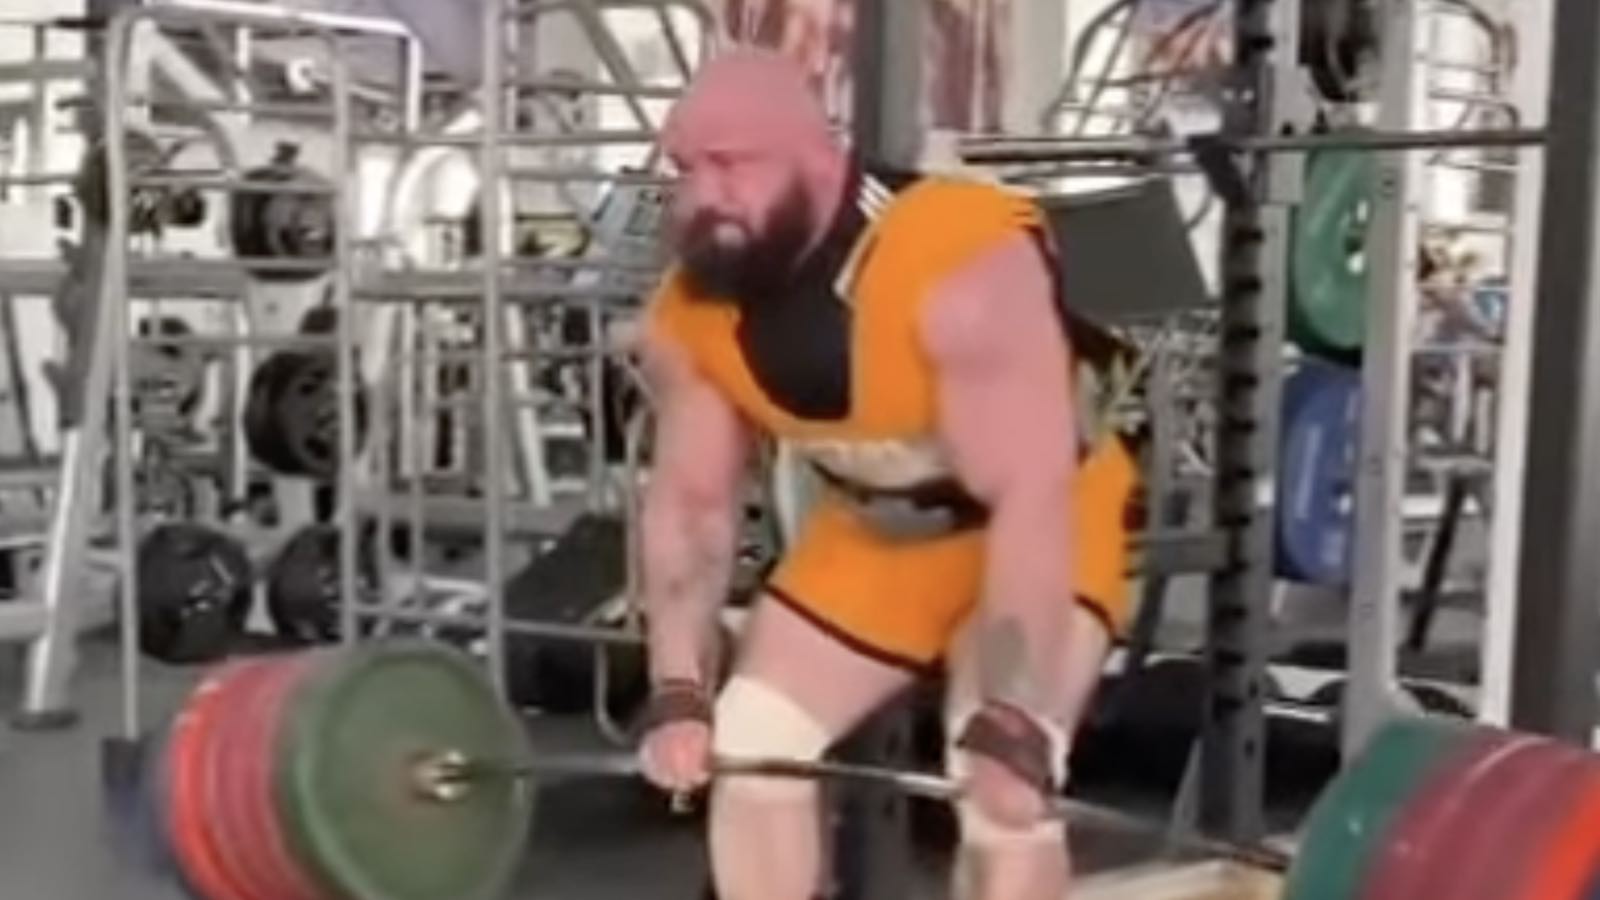 strongman-leon-miroshnik-deadlifts-410-kilograms-(903.9-pounds),-nearly-4-times-his-body-weight-–-breaking-muscle